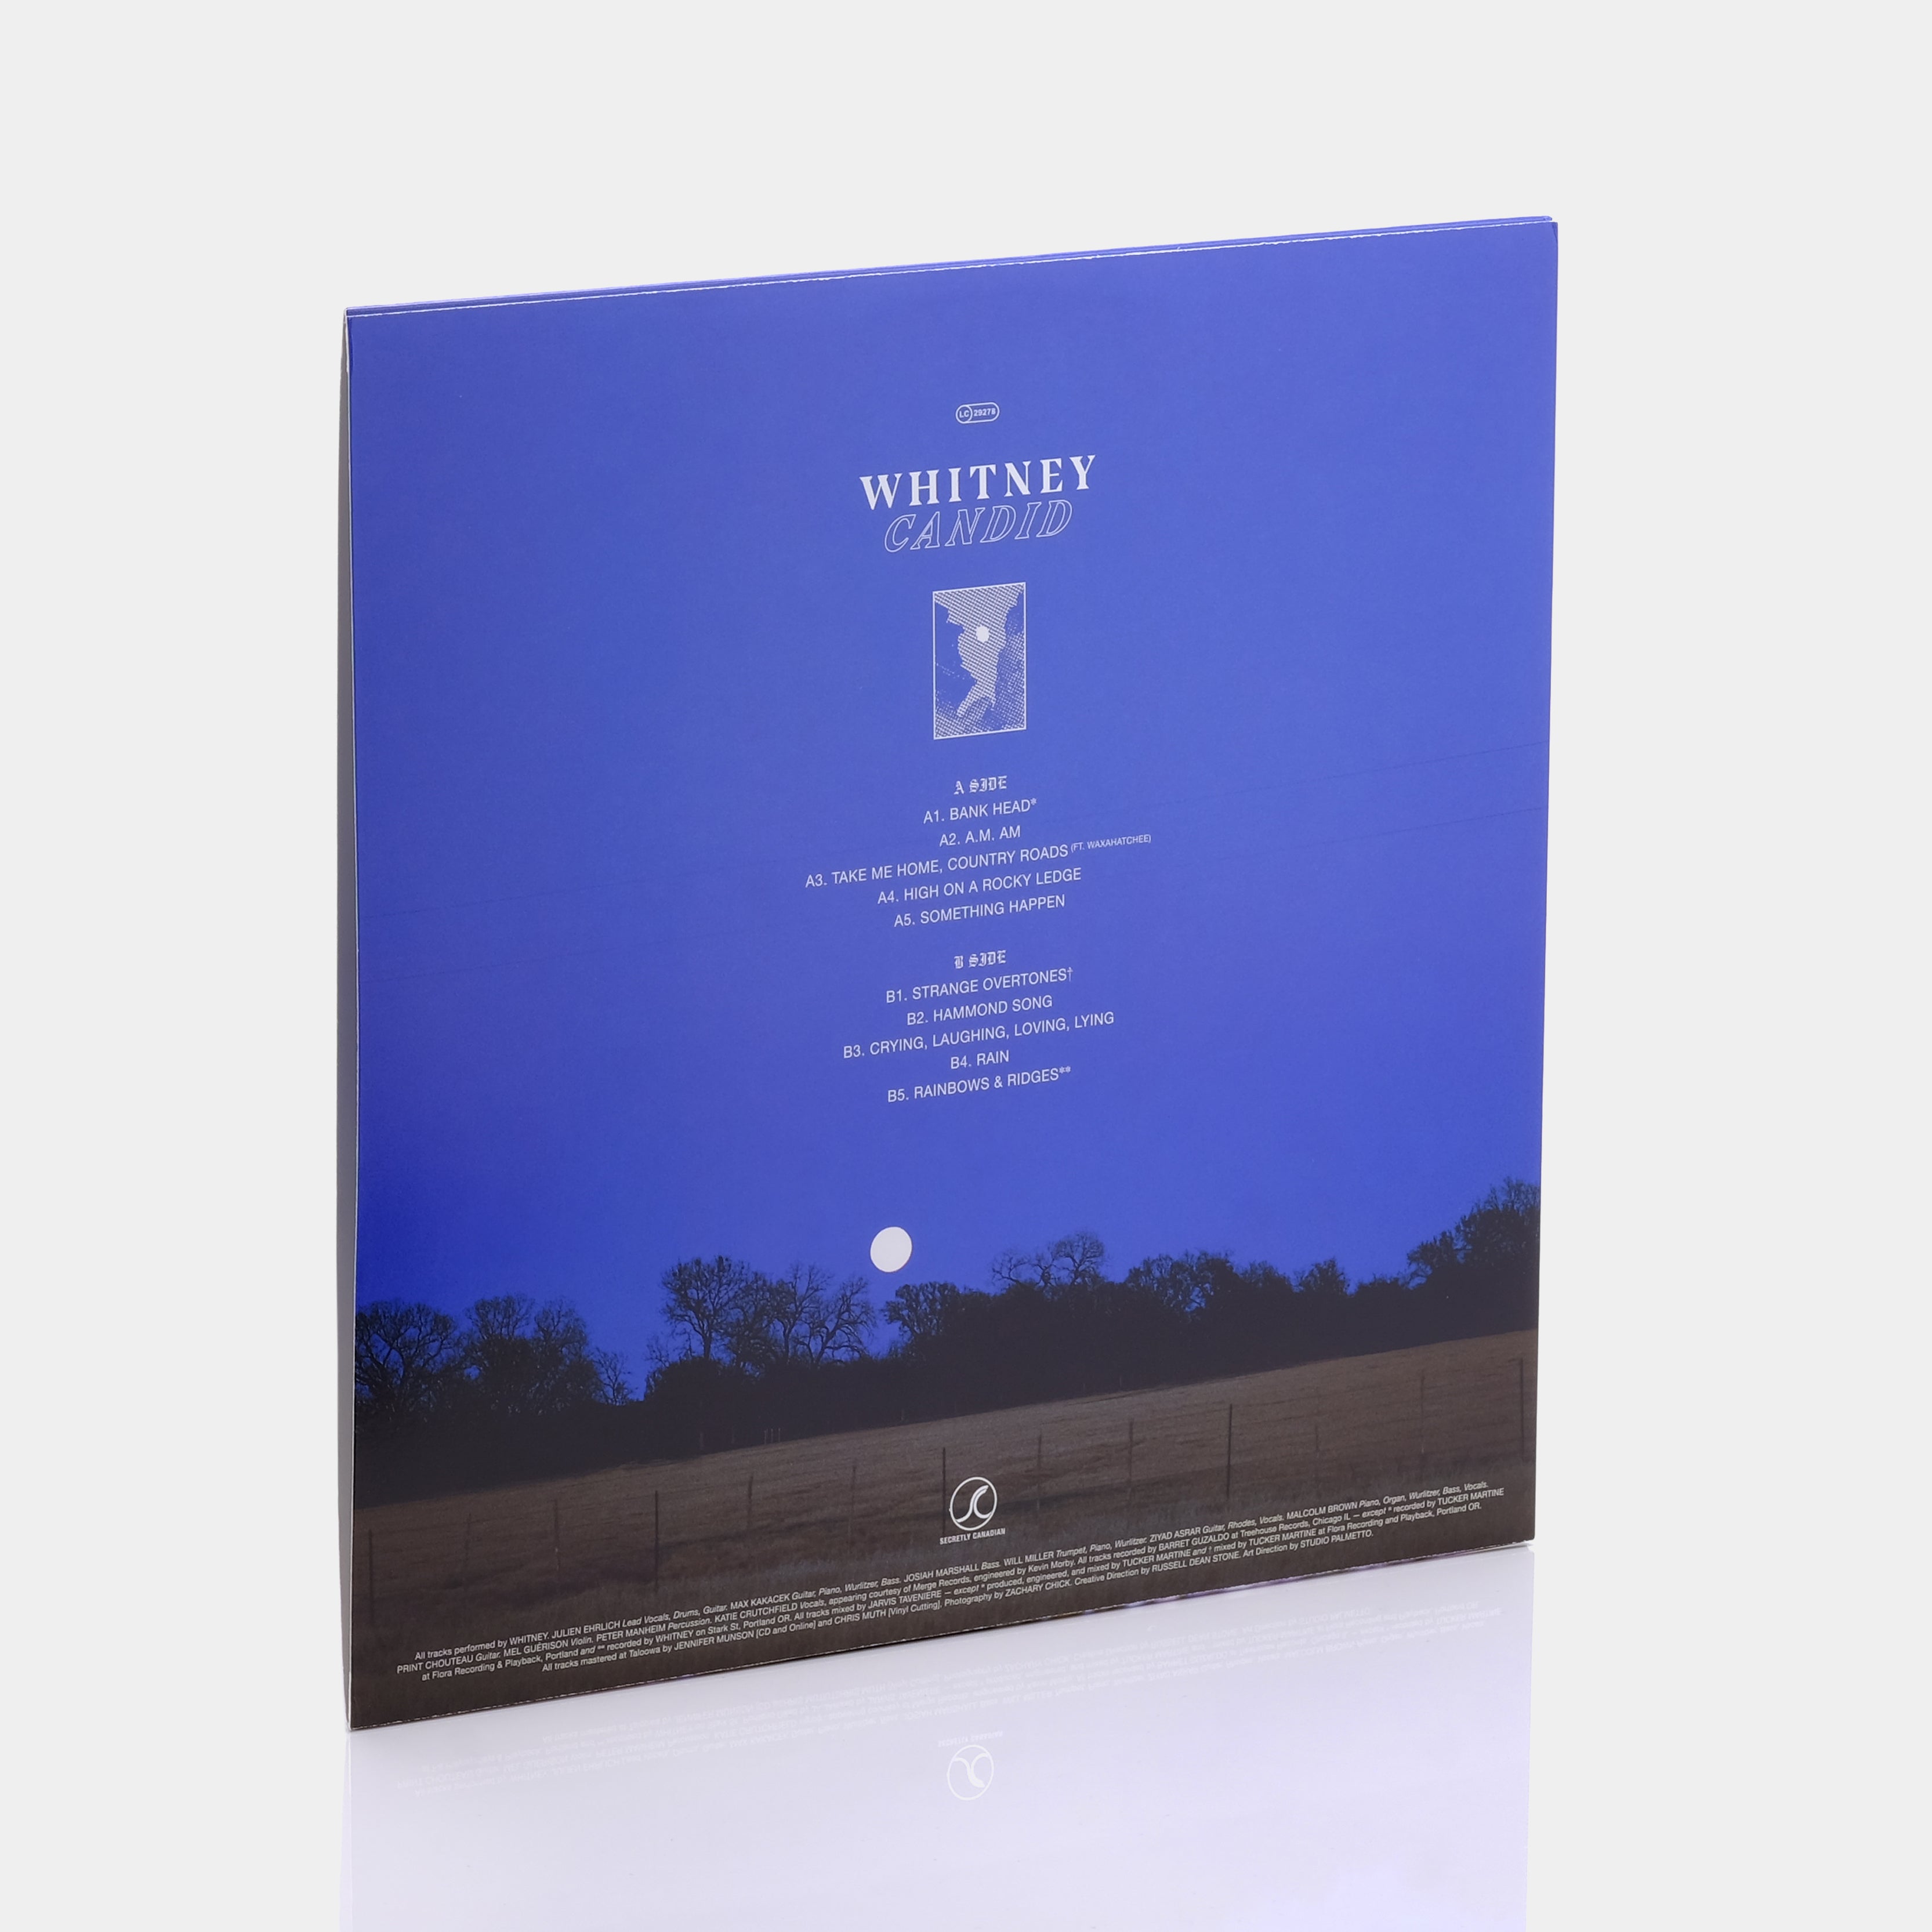 Whitney - Candid LP Blue Vinyl Record